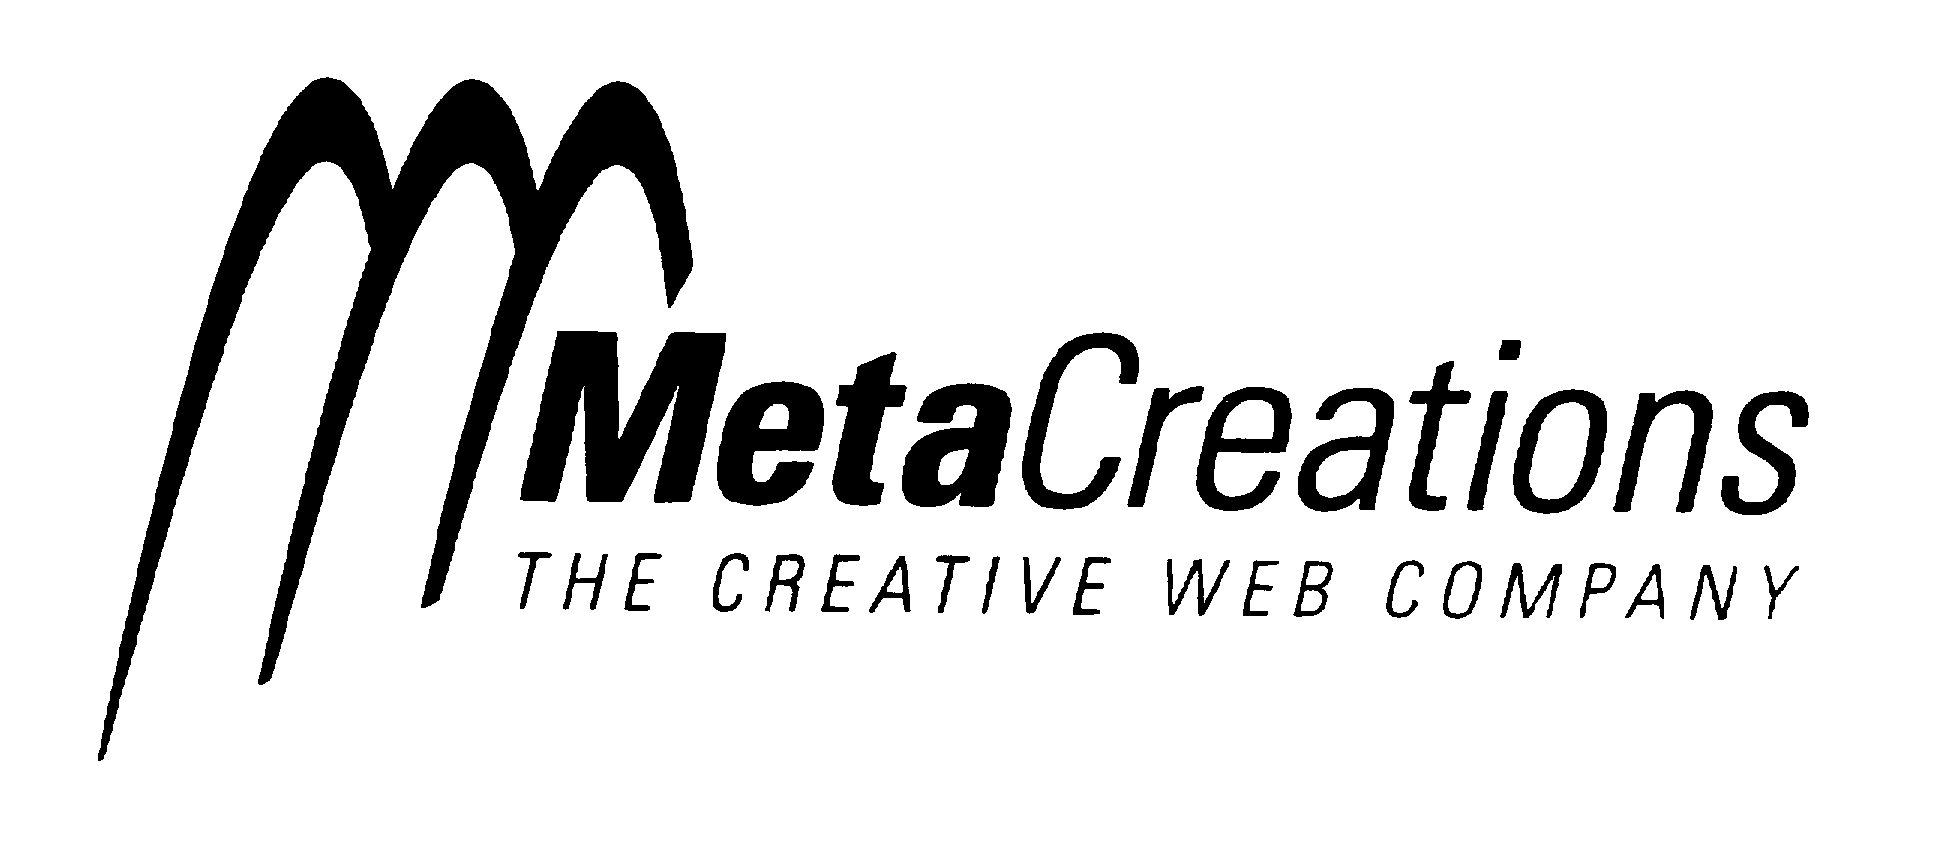  METACREATIONS - THE CREATIVE WEB COMPANY